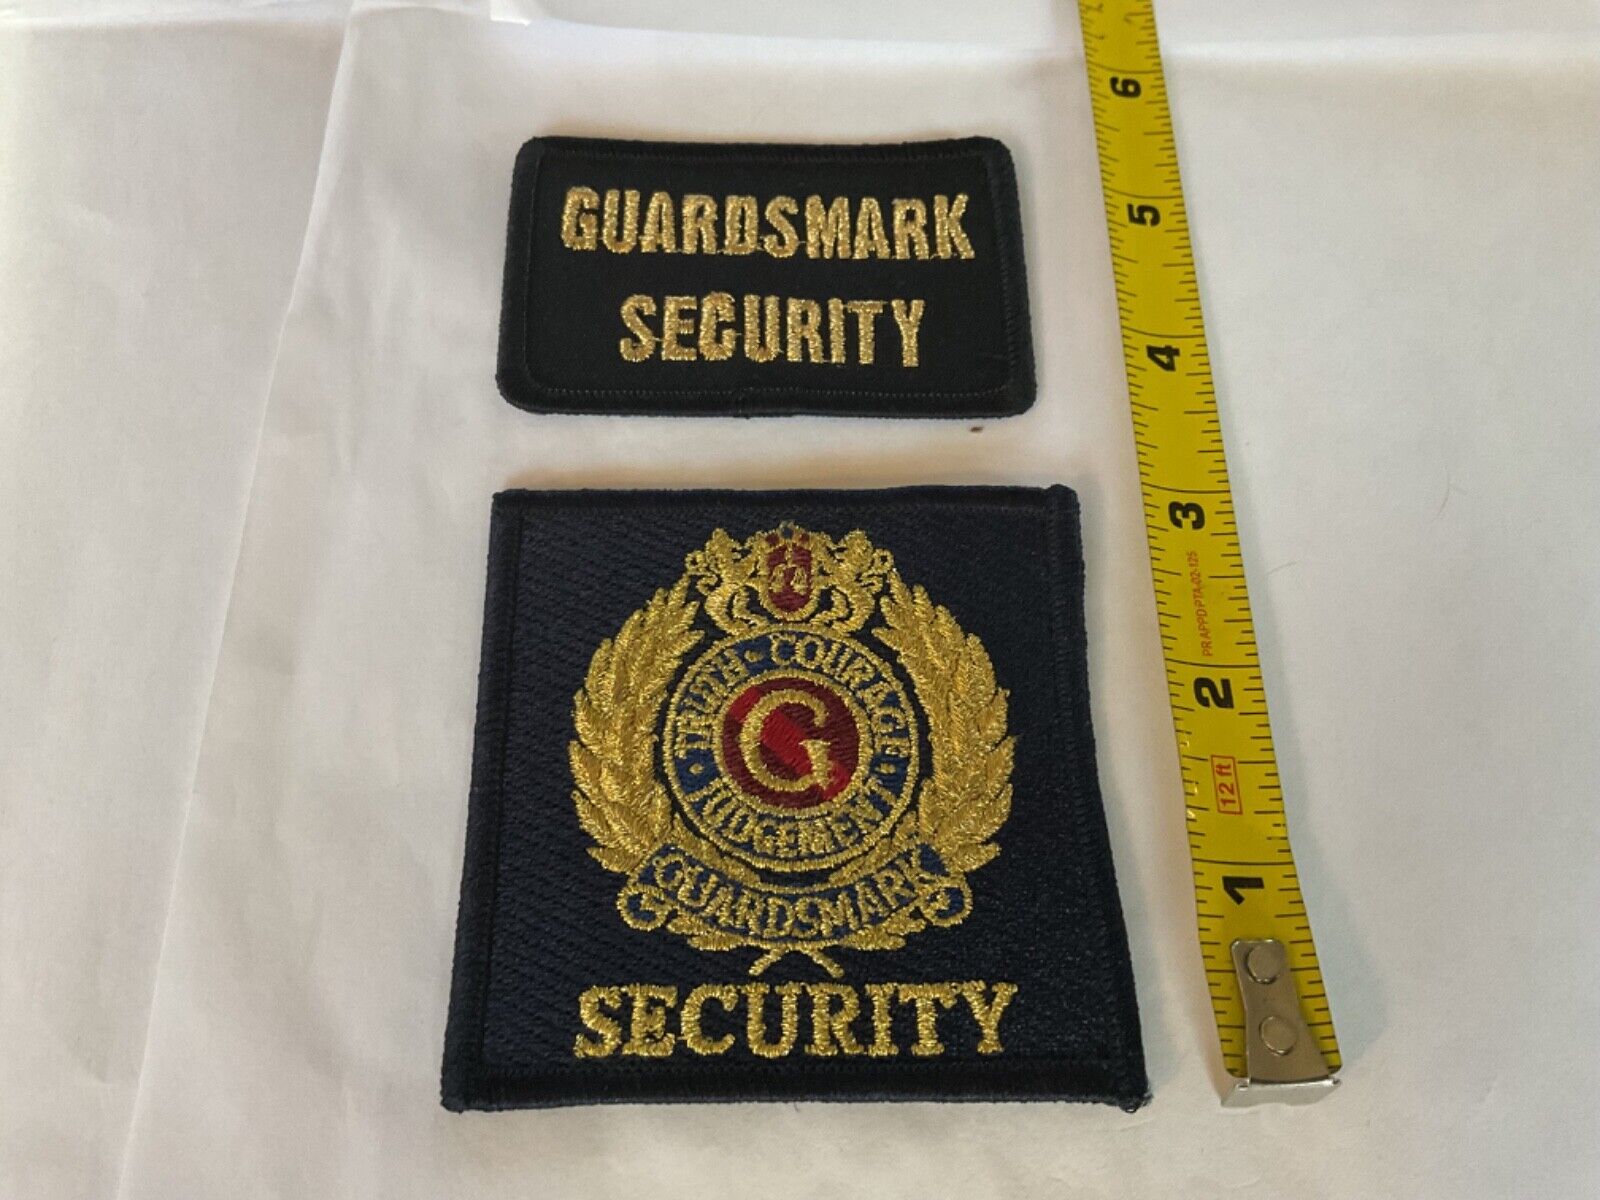 Obsolete Vintage Guardsmark Security collectible patch set